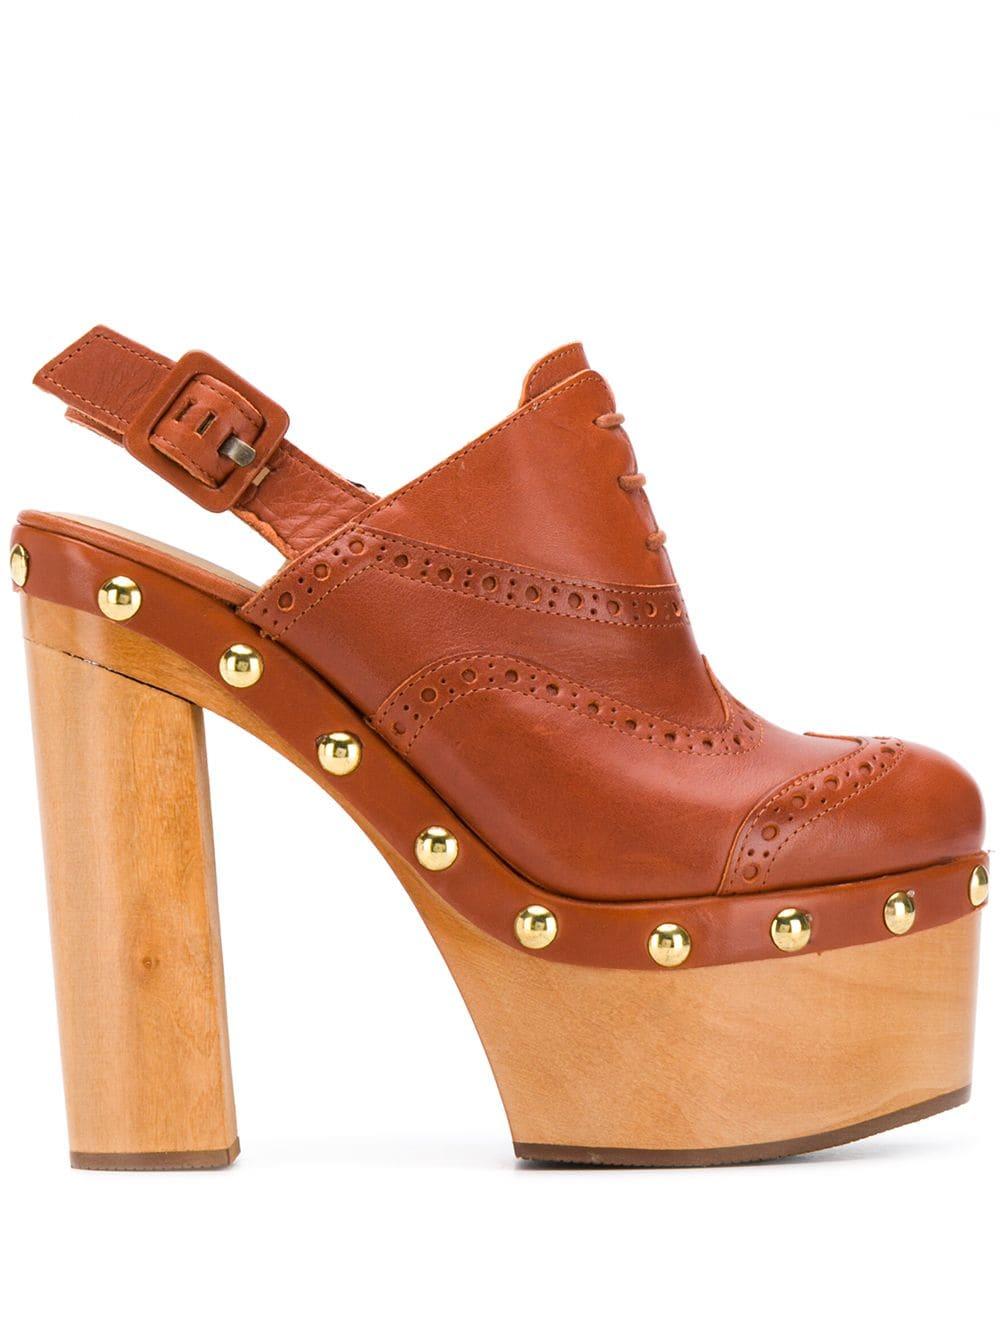 Tommy Hilfiger X Zendaya Slingback Sandals in Brown | Lyst